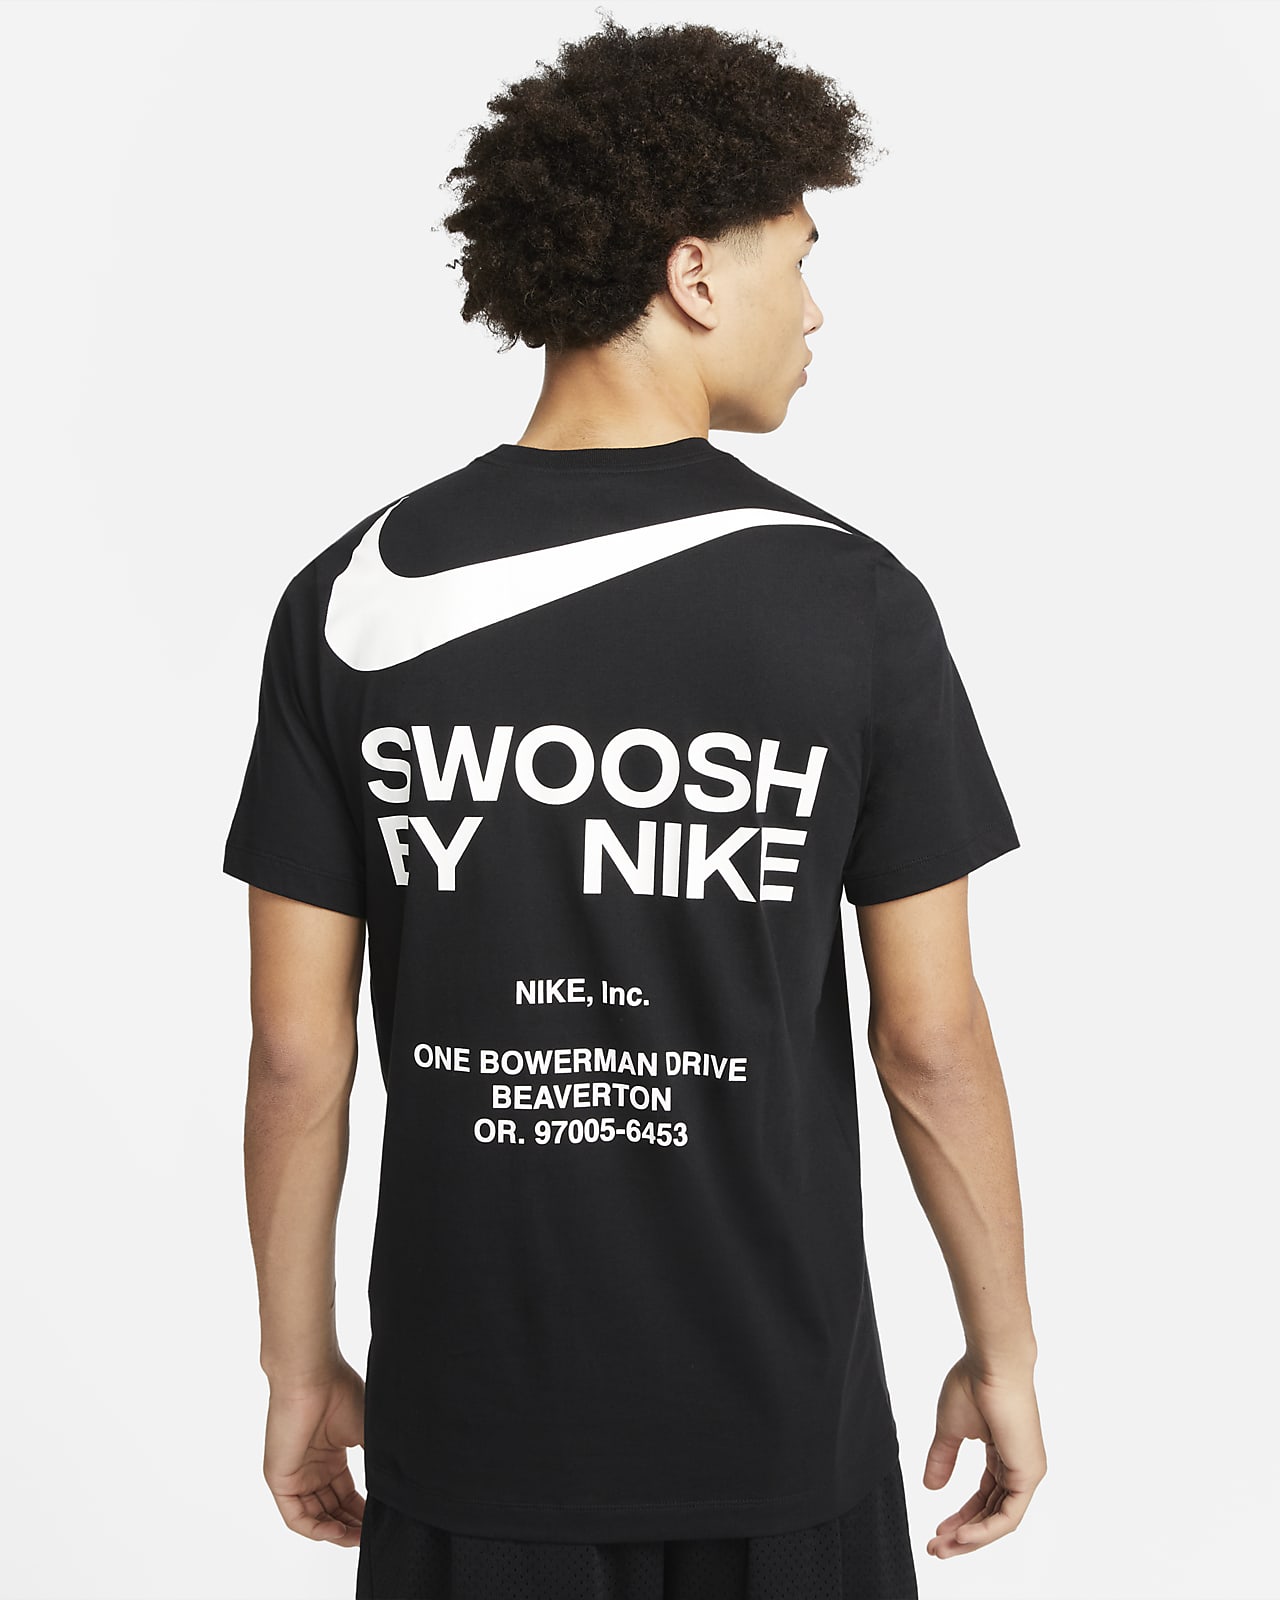 Nike Sportswear T-shirt voor heren. BE